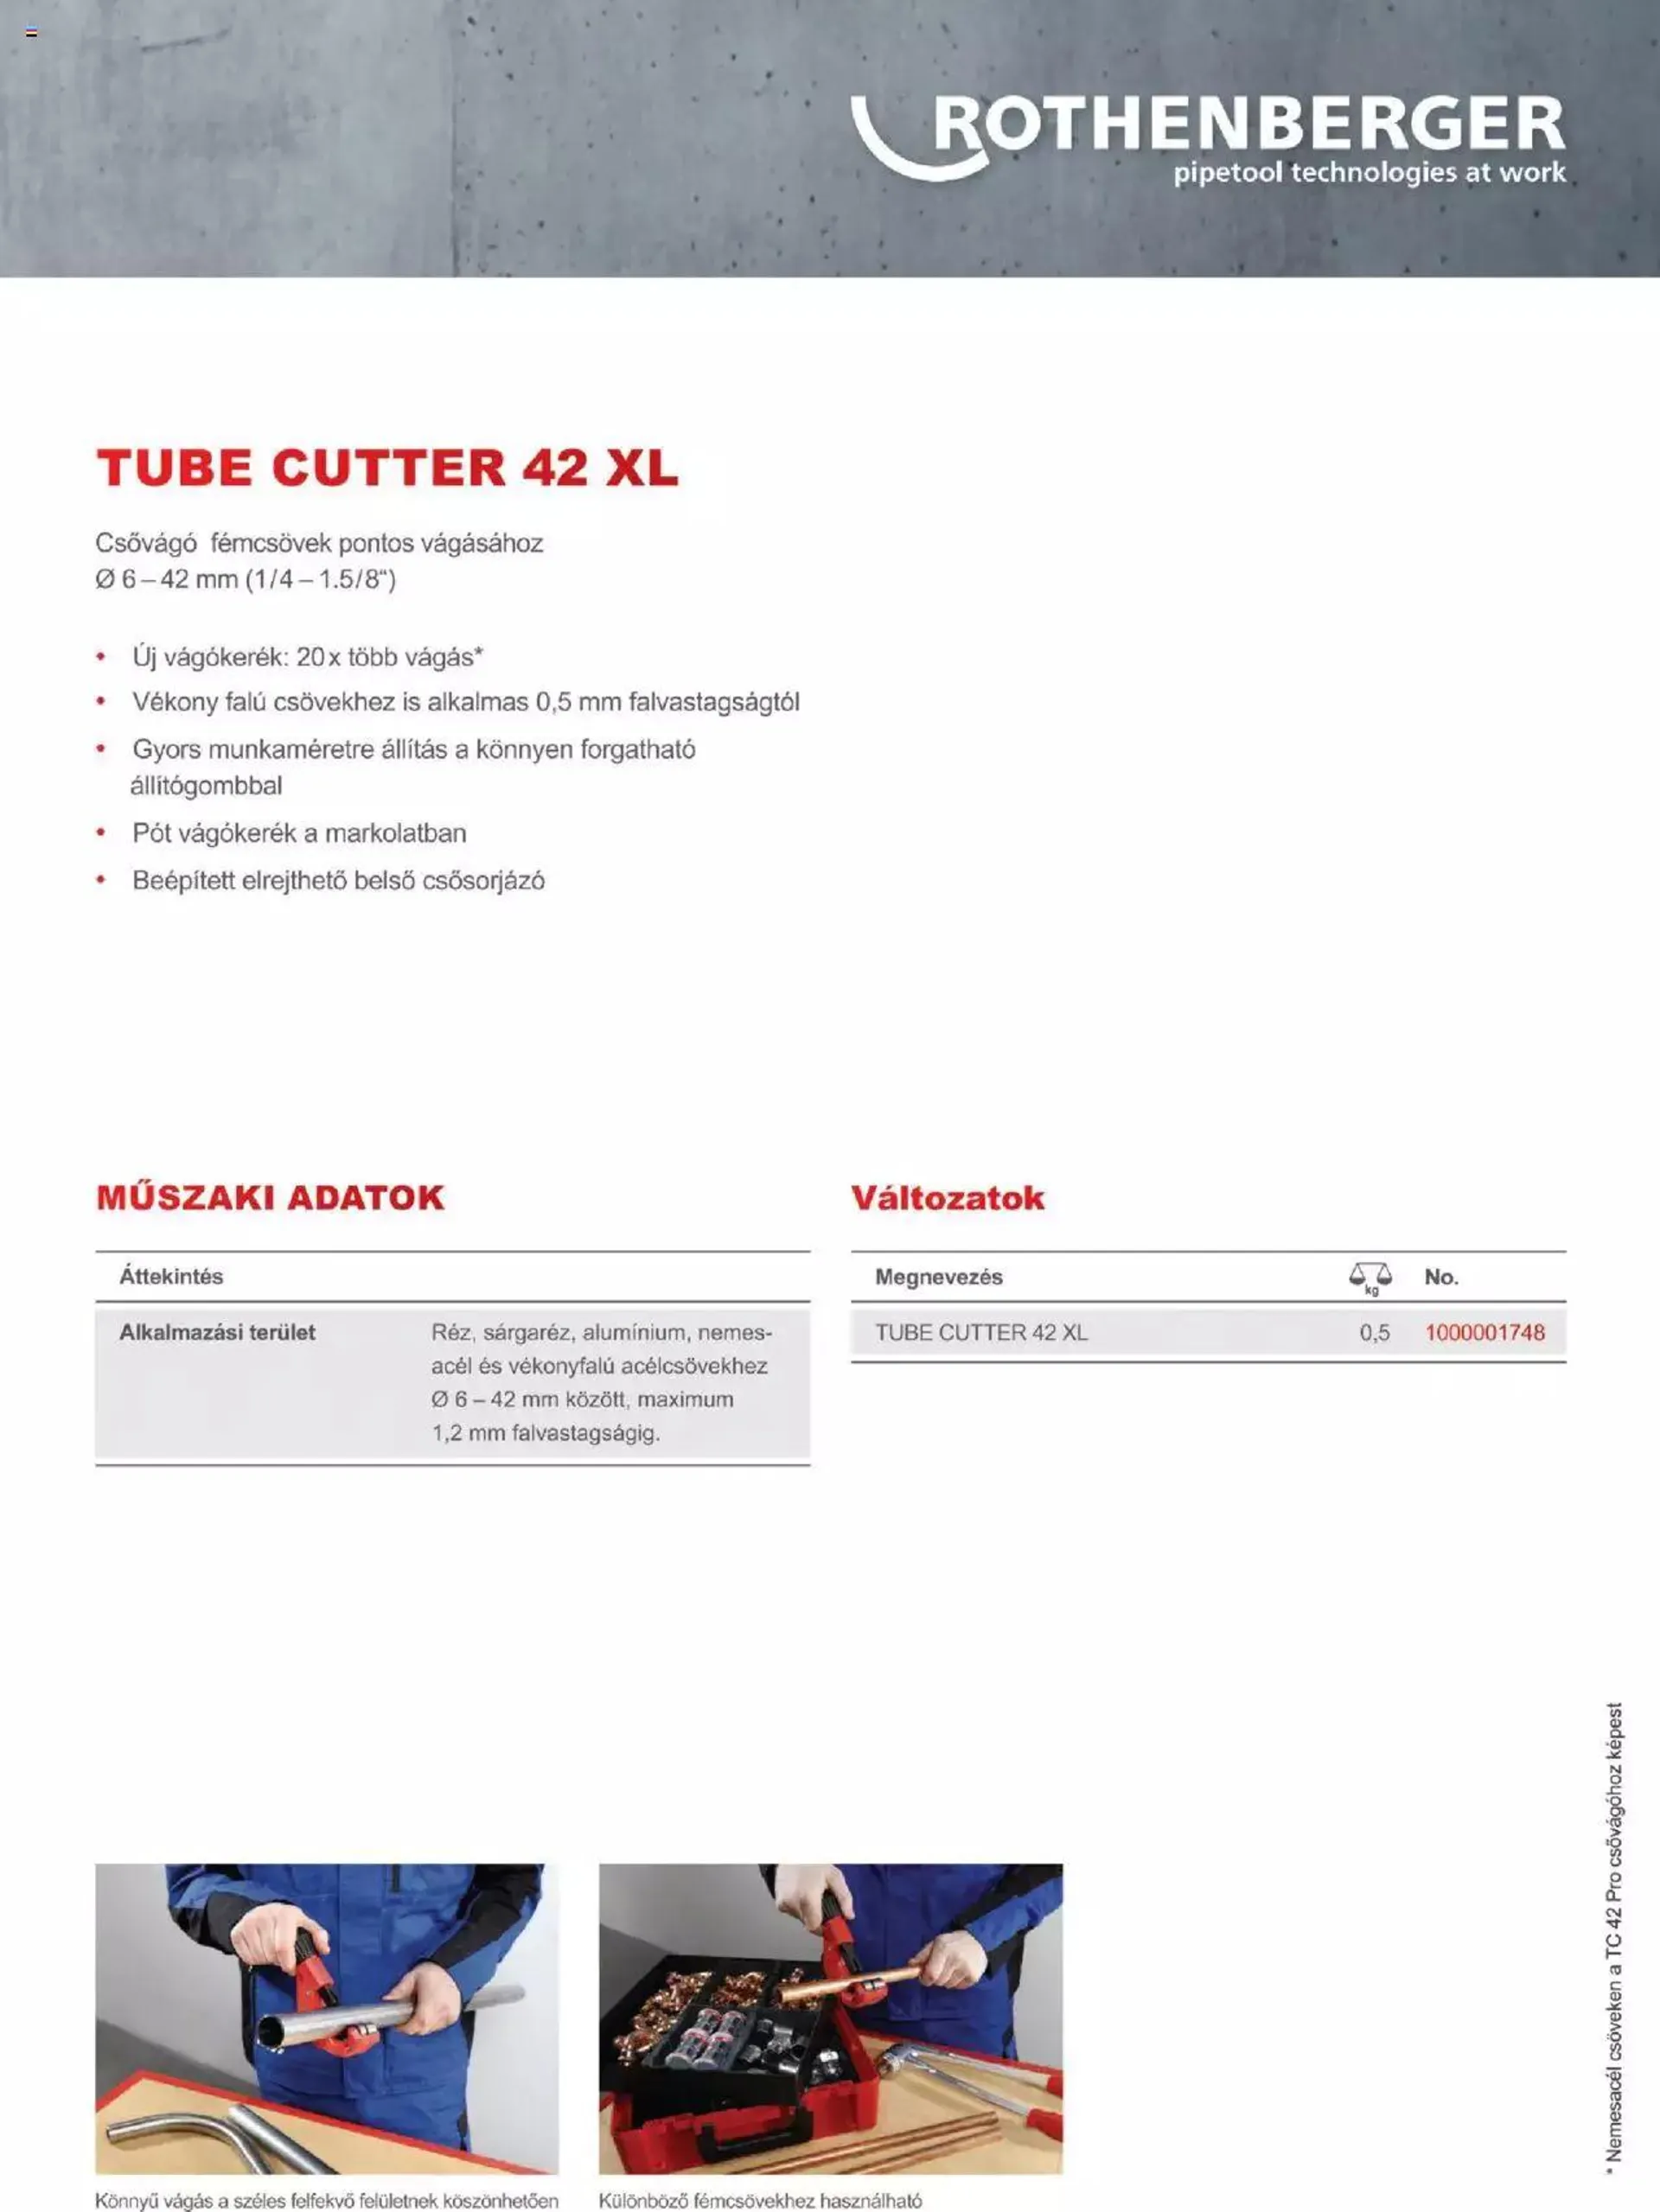 Rothenberger - Tube Cutter 42 Xl - 2